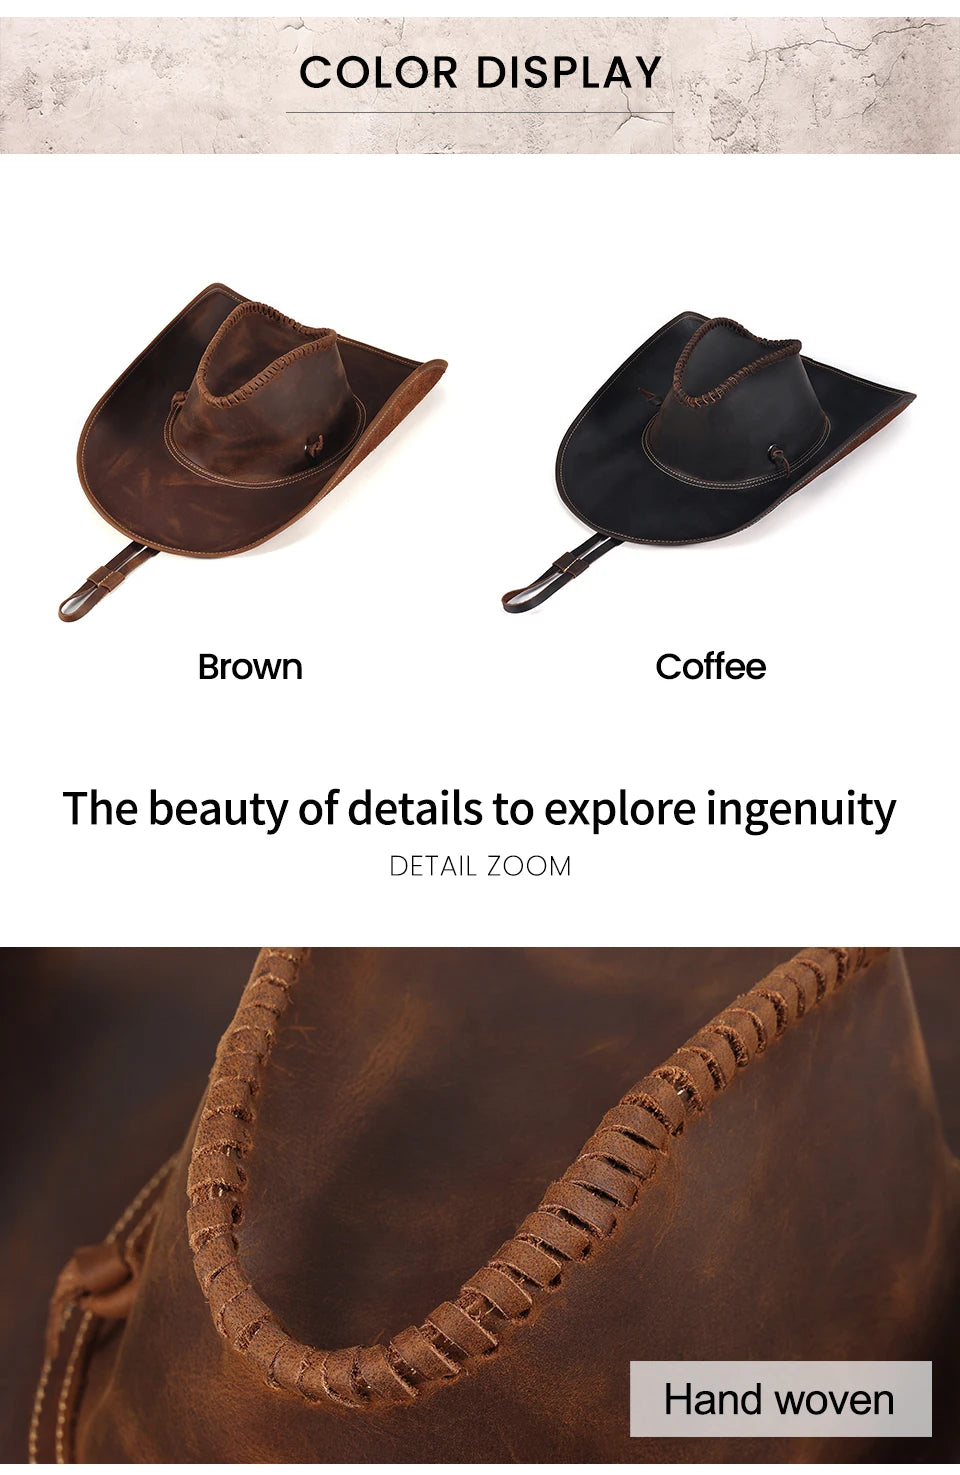 Kashani Weaved Leather Western Cowboy Hat - Dudes Boutique